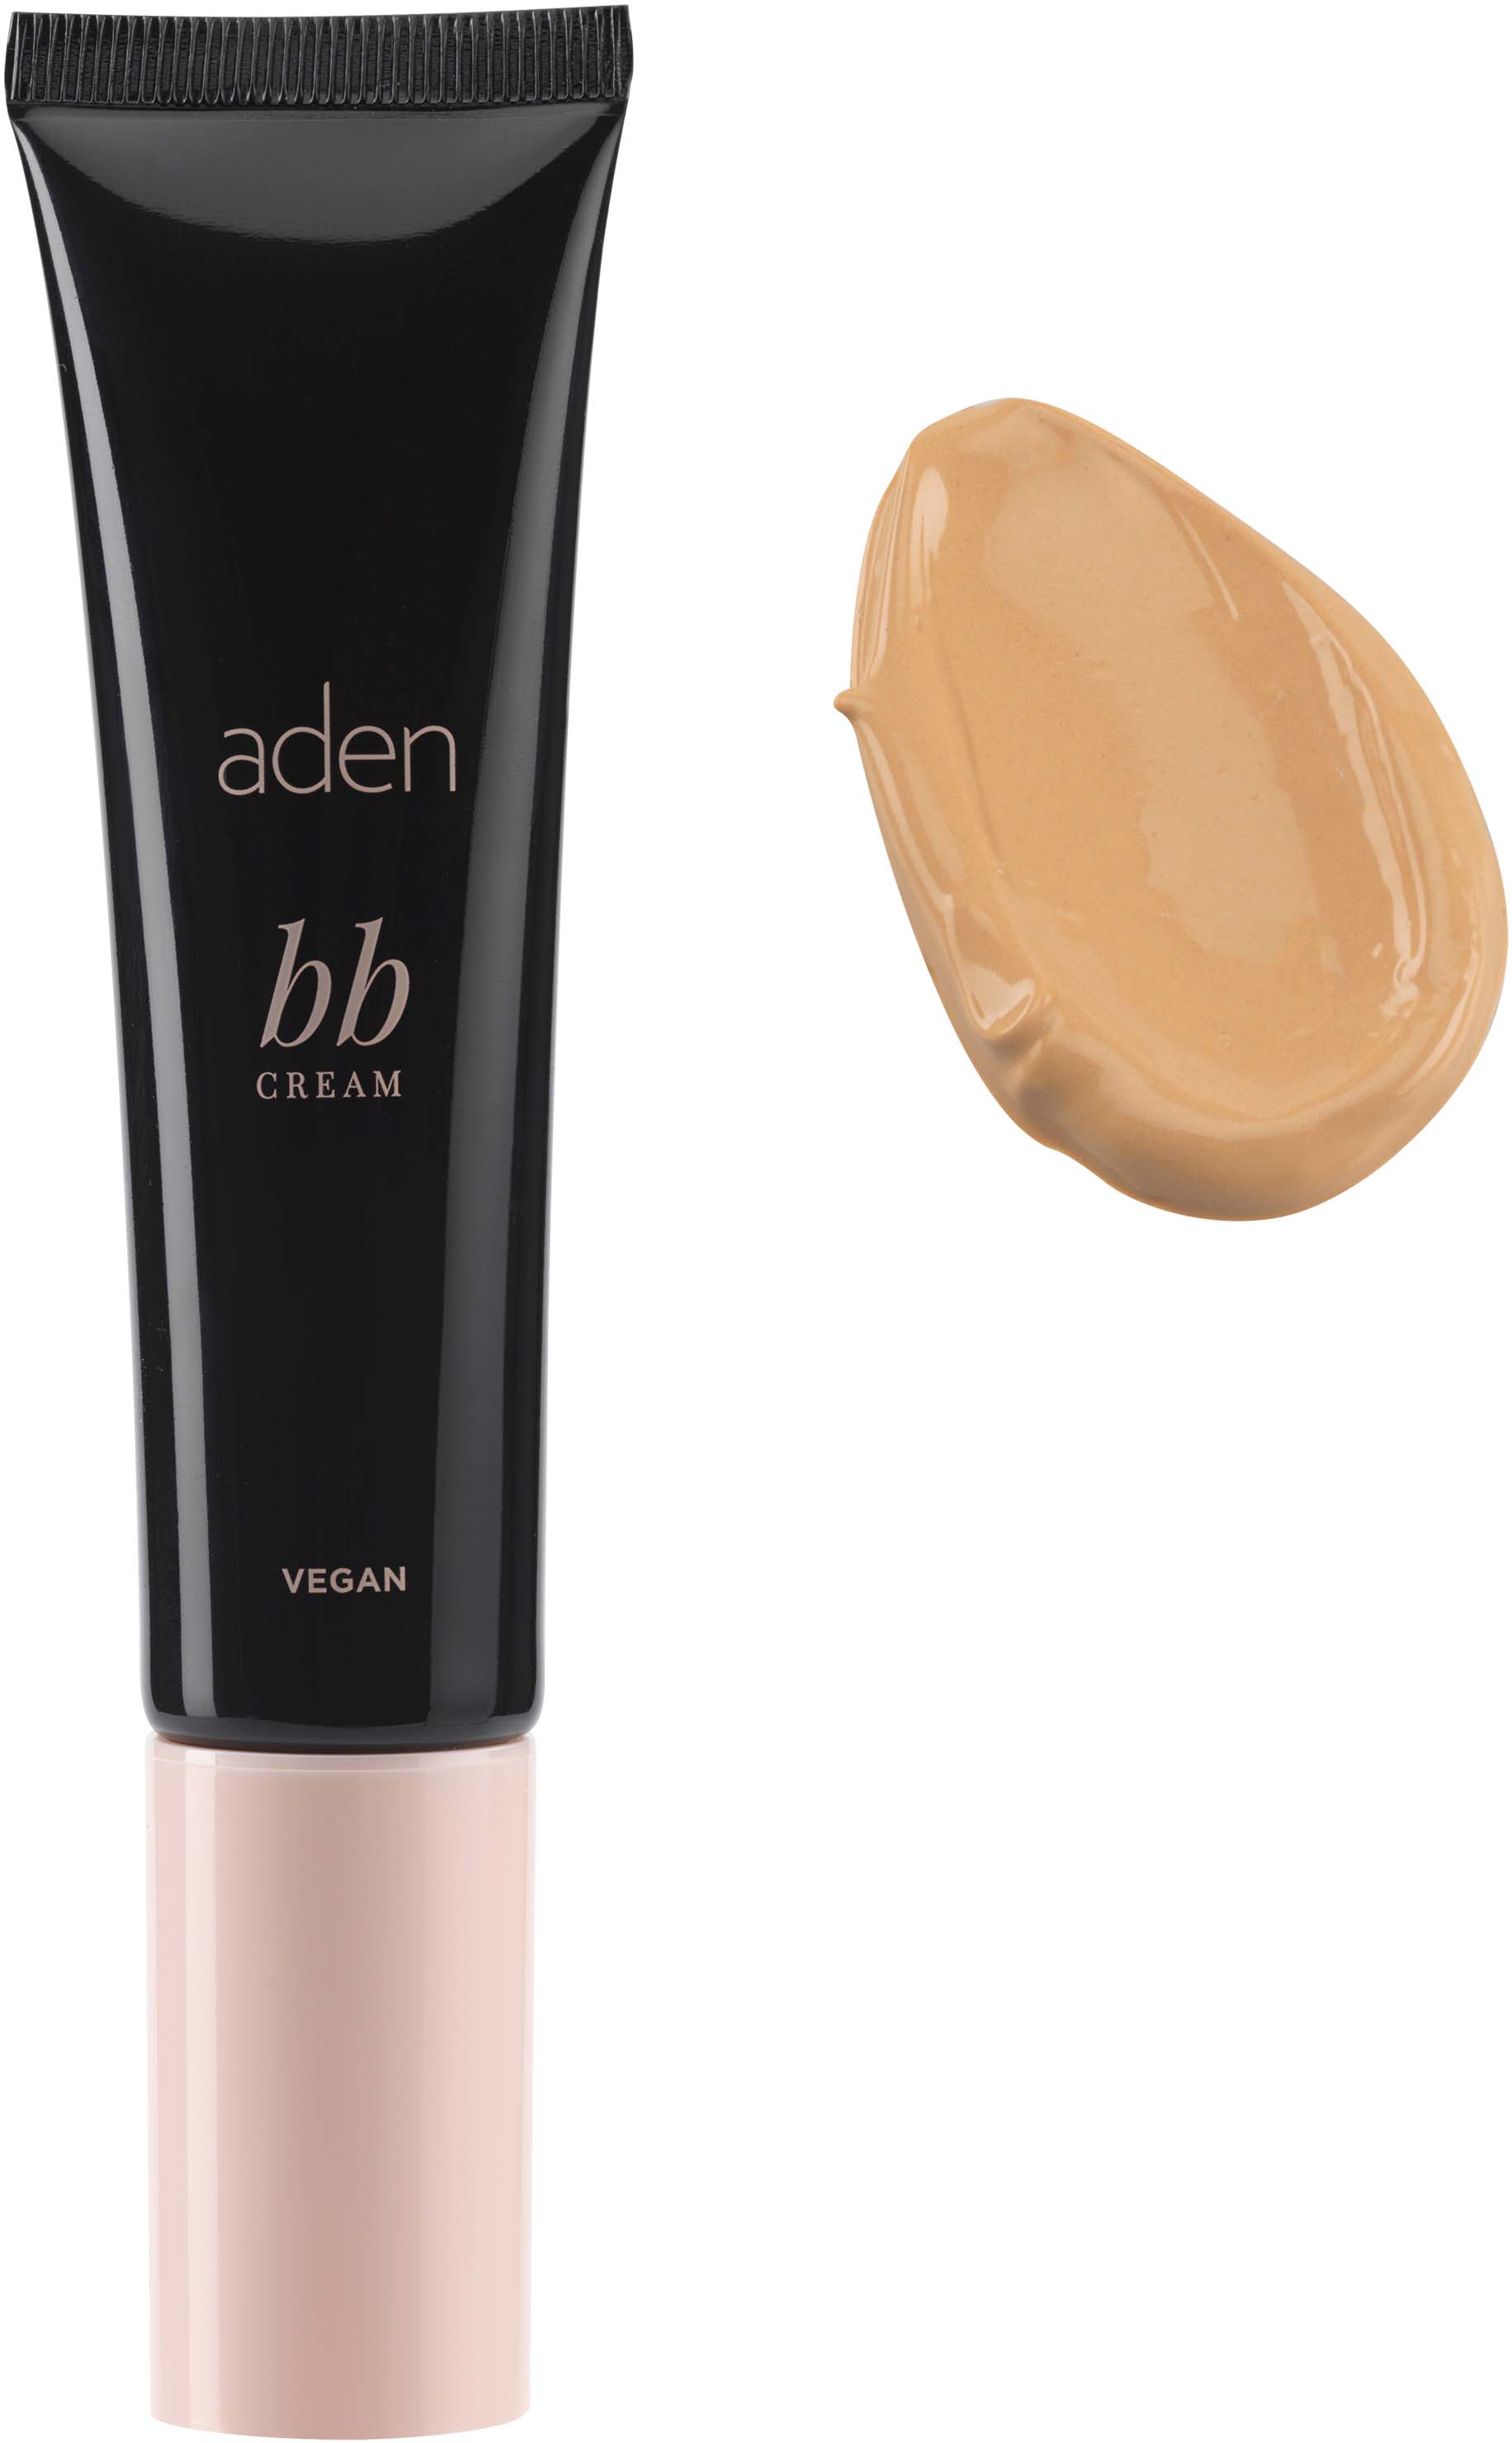 Aden BB Cream 02 UV-protection 40 ml